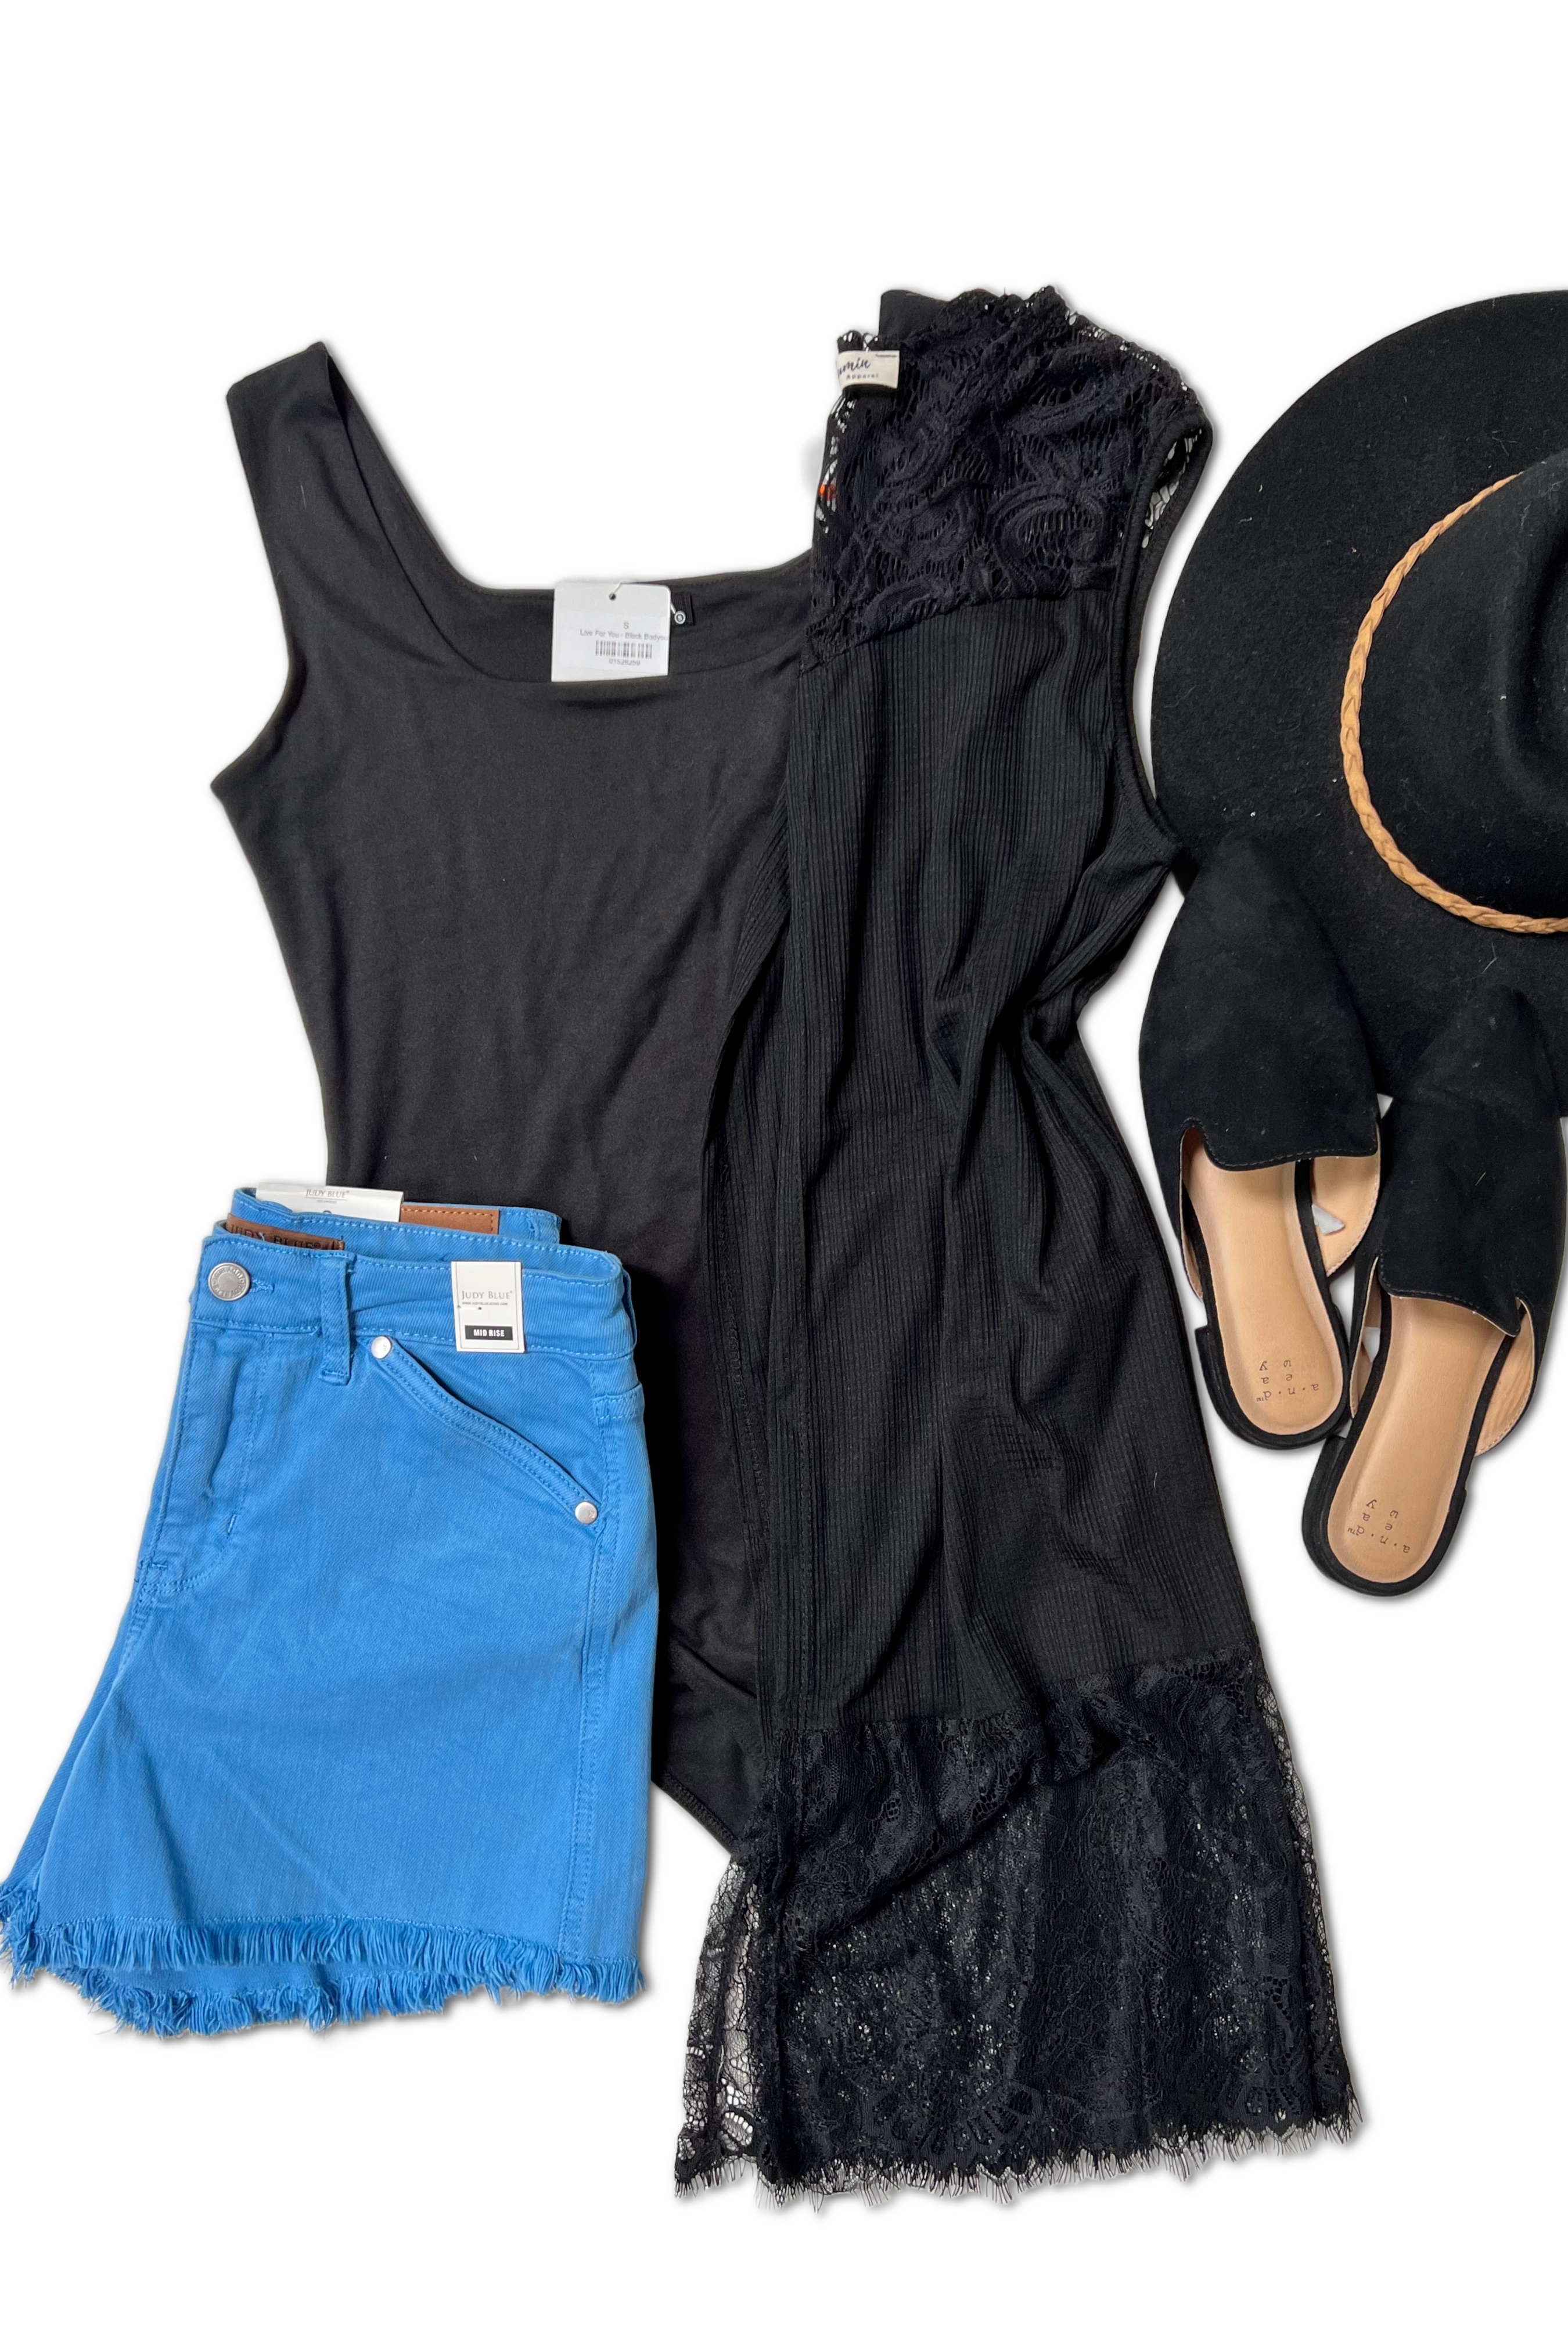 Summery Layers - Vest-Boutique Simplified-Urban Threadz Boutique, Women's Fashion Boutique in Saugatuck, MI